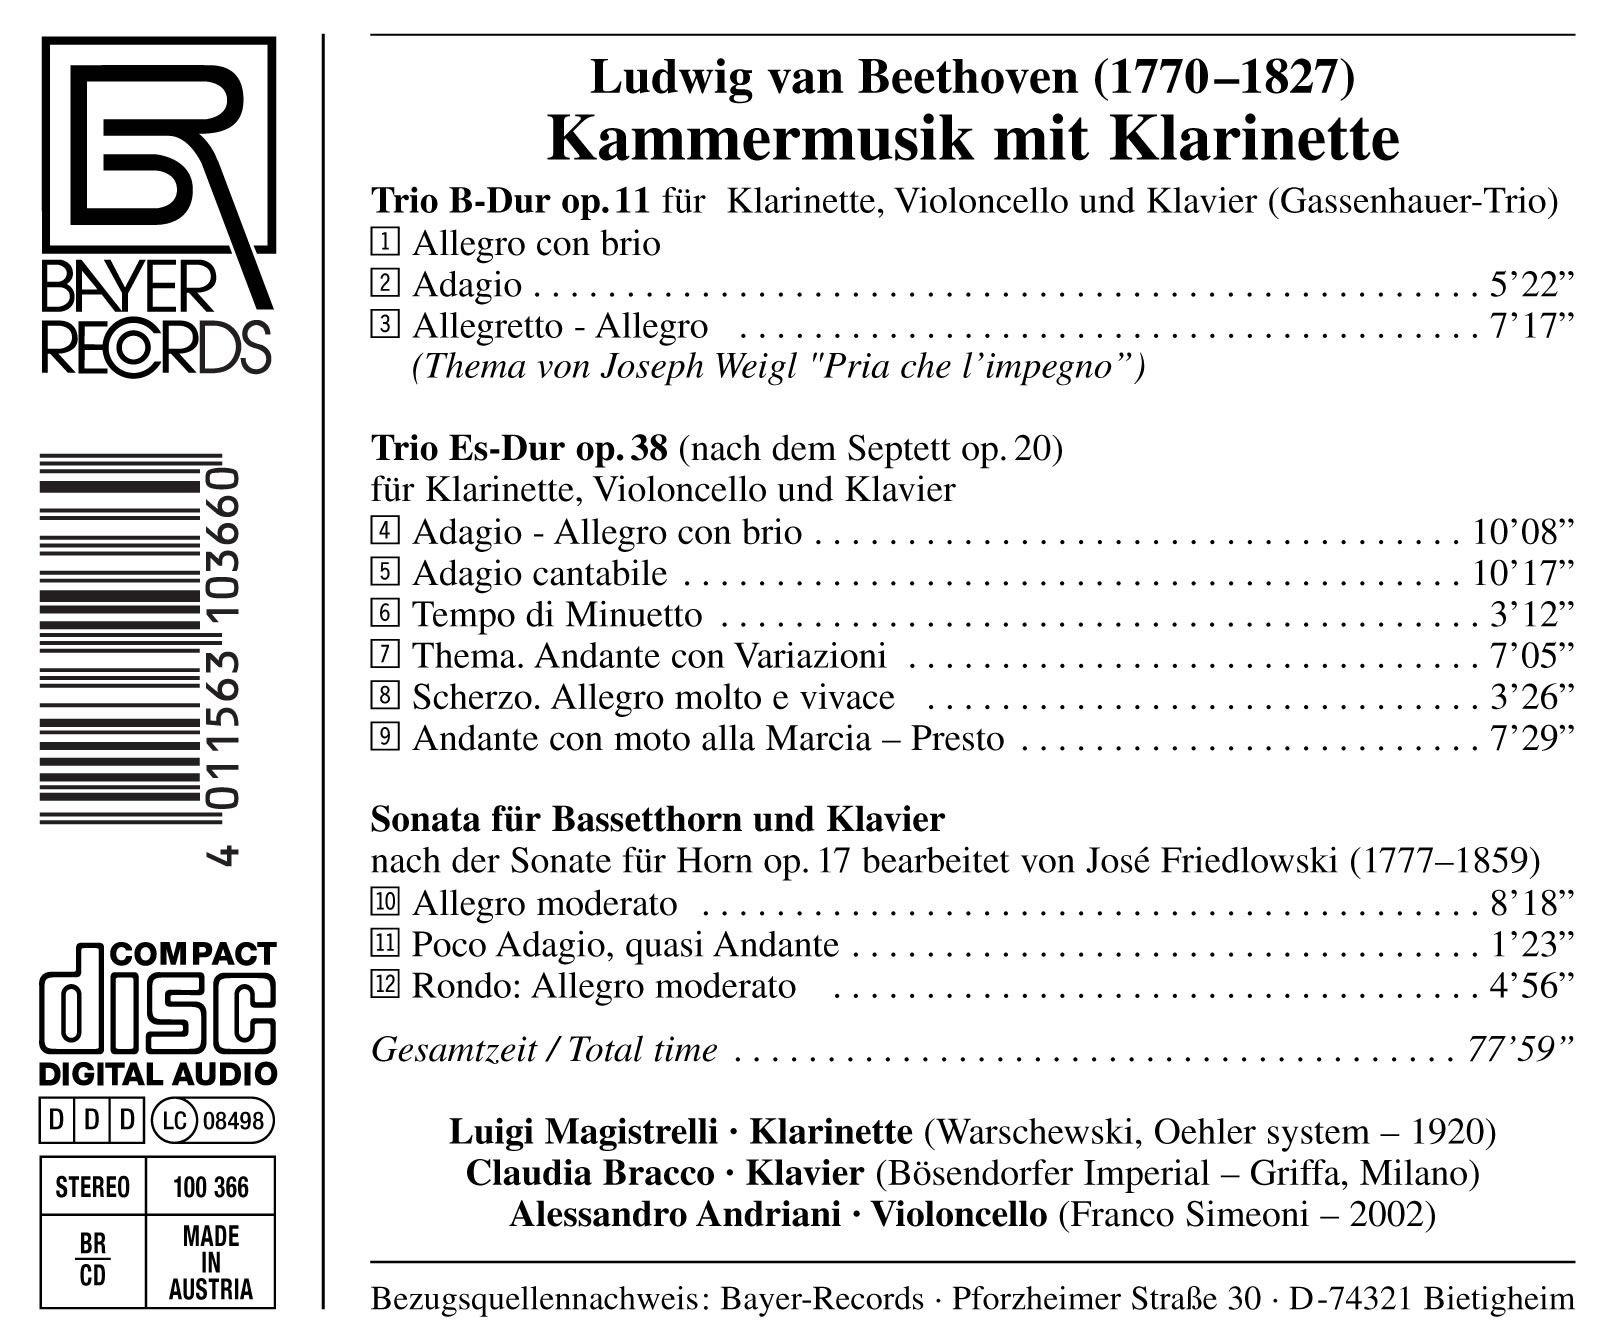 Ludwig van Beethoven - Kammermusik mit Klarinette